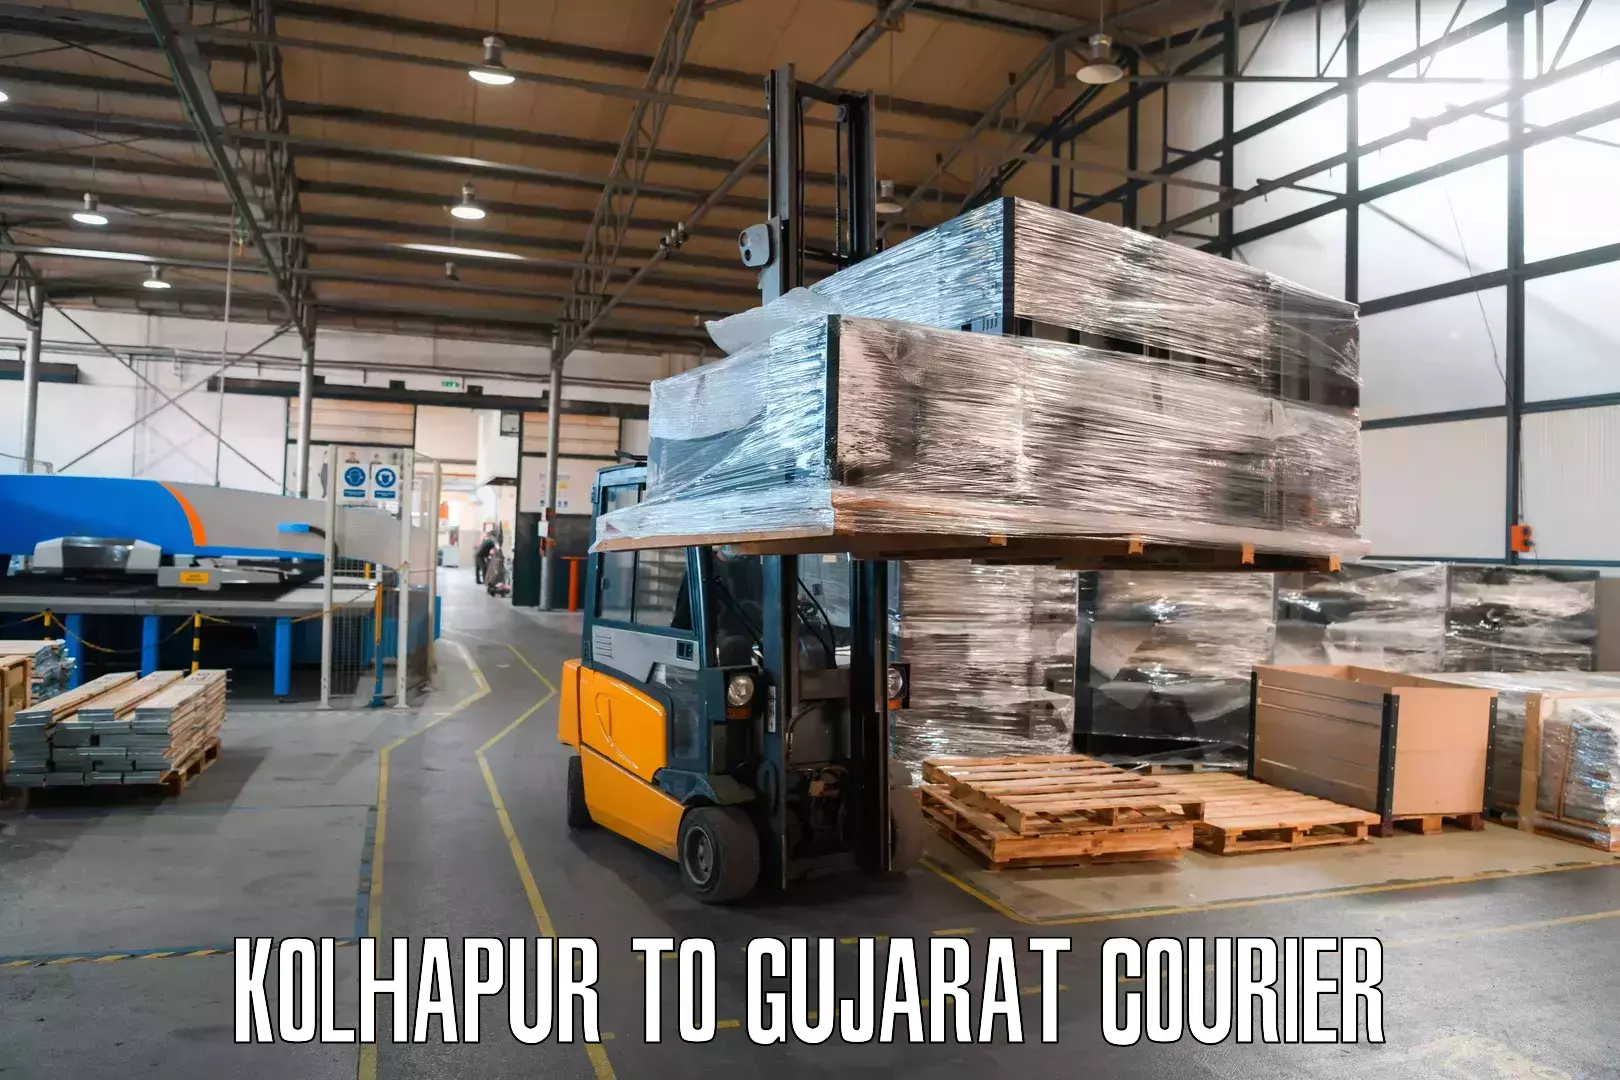 Courier service comparison Kolhapur to Jamjodhpur